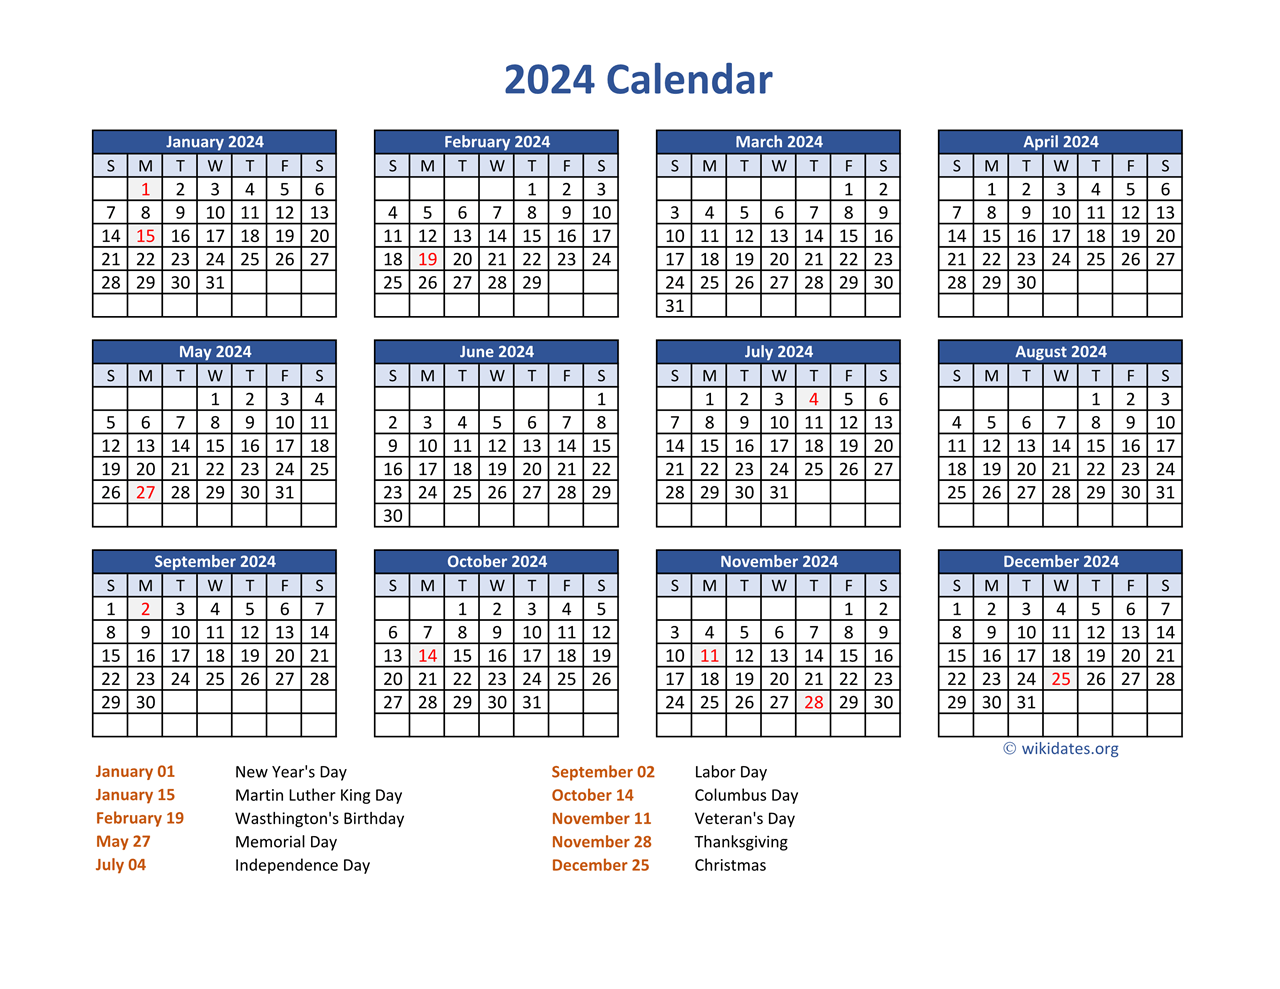 Pdf Calendar 2024 With Federal Holidays | Wikidates for Printable 2024 Calendar With Federal Holidays